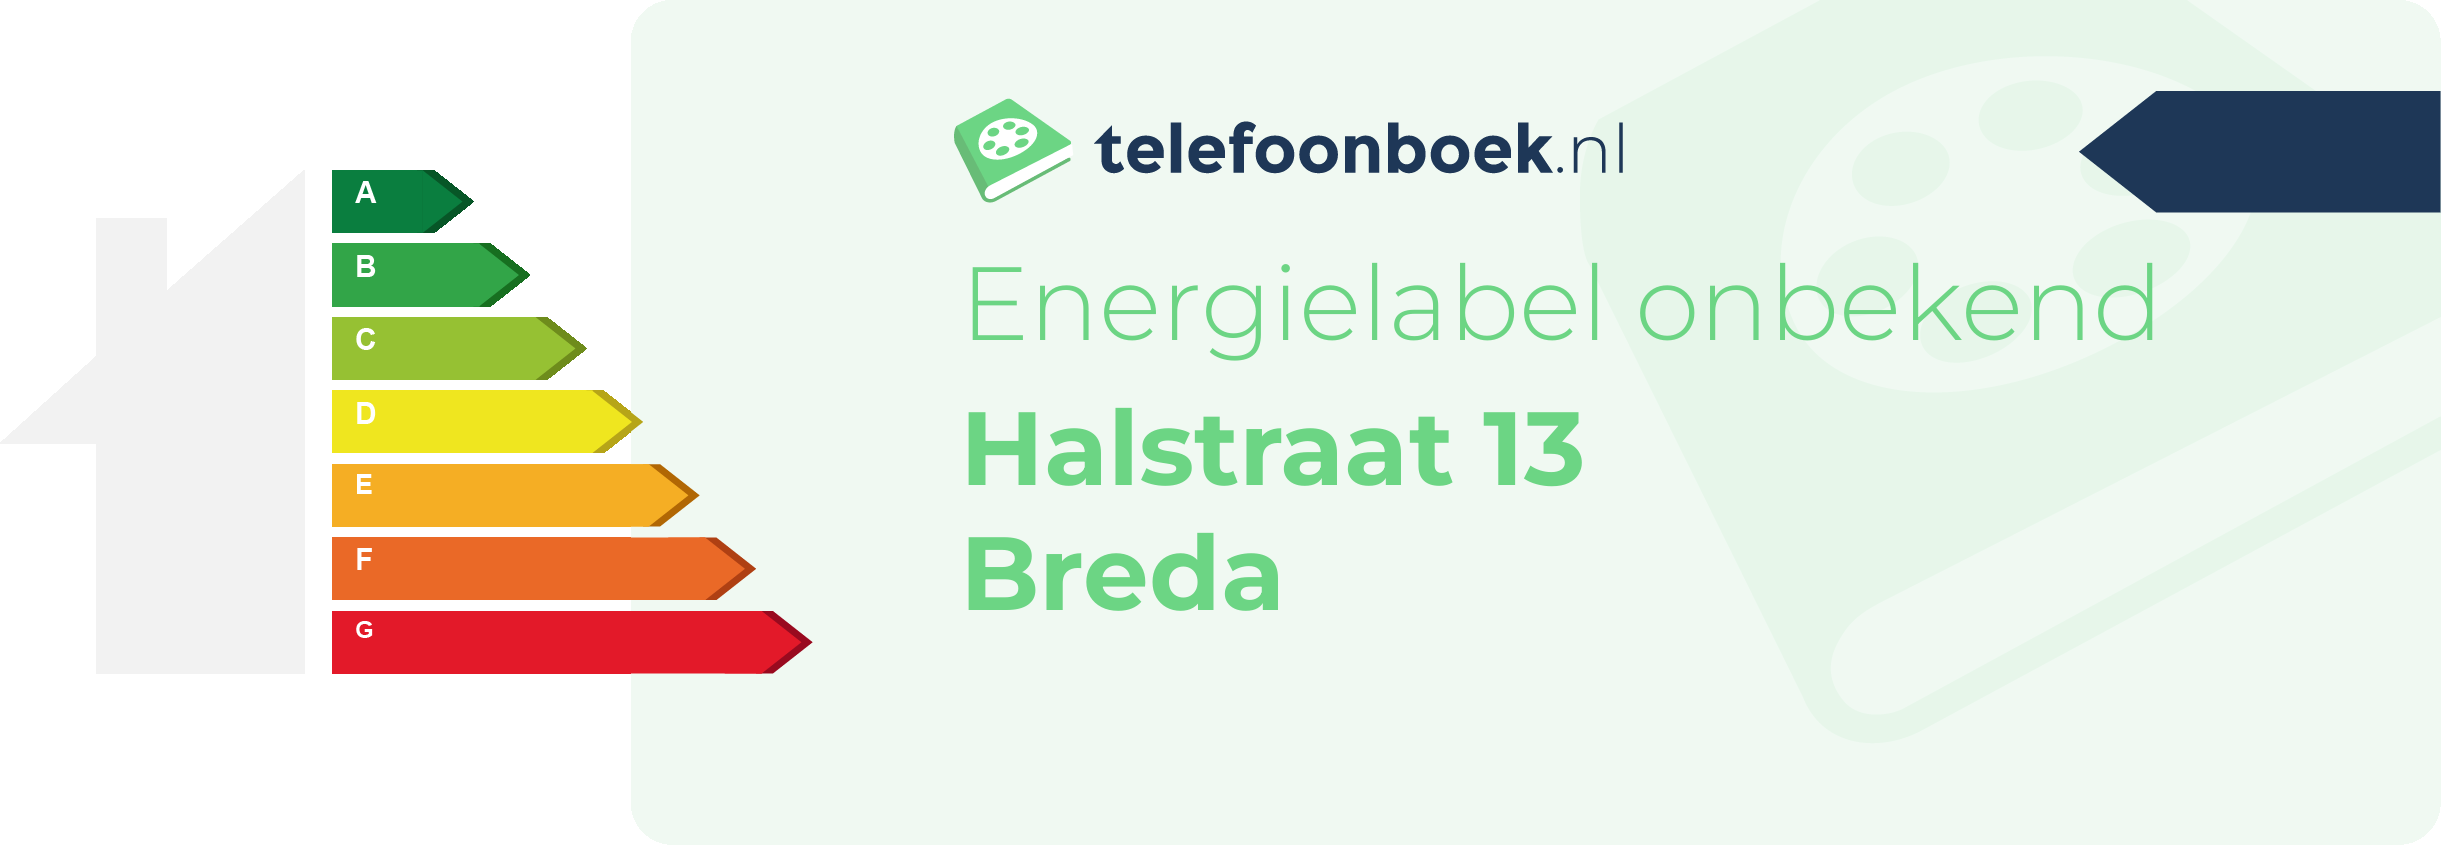 Energielabel Halstraat 13 Breda